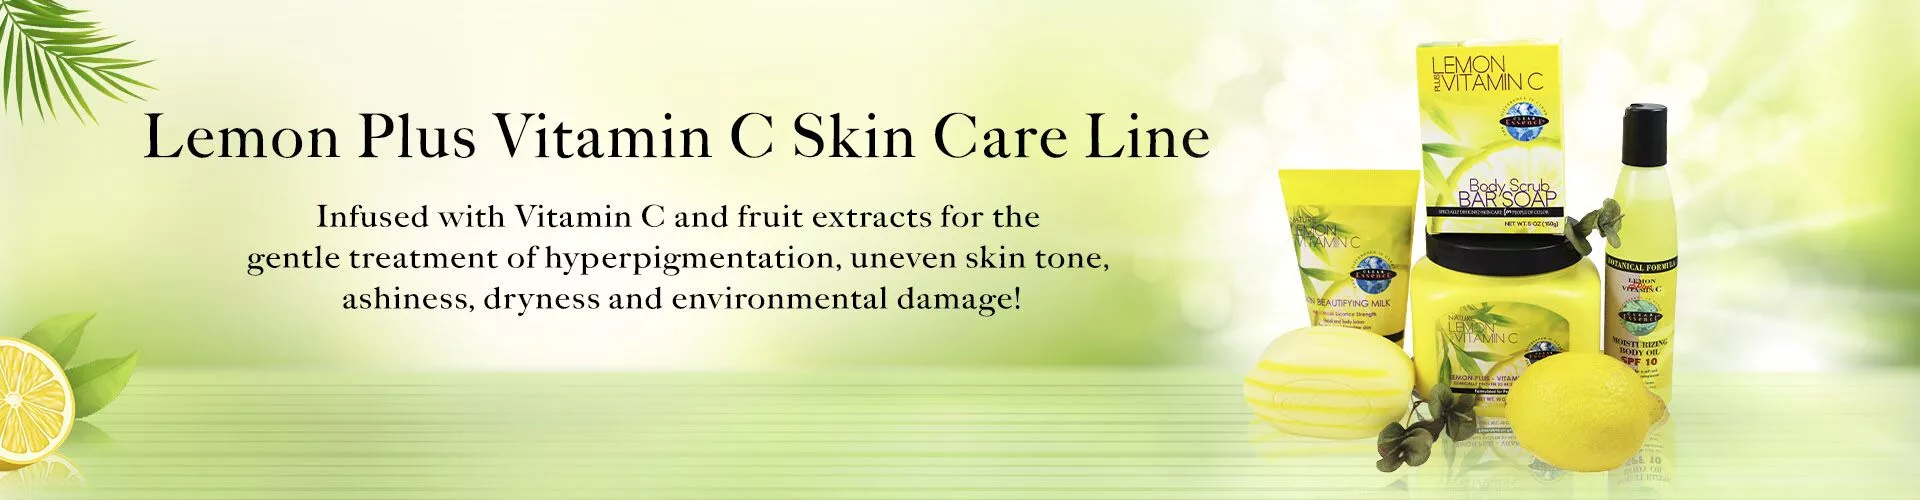 Lemon Plus Vitamin C Skin Care Line